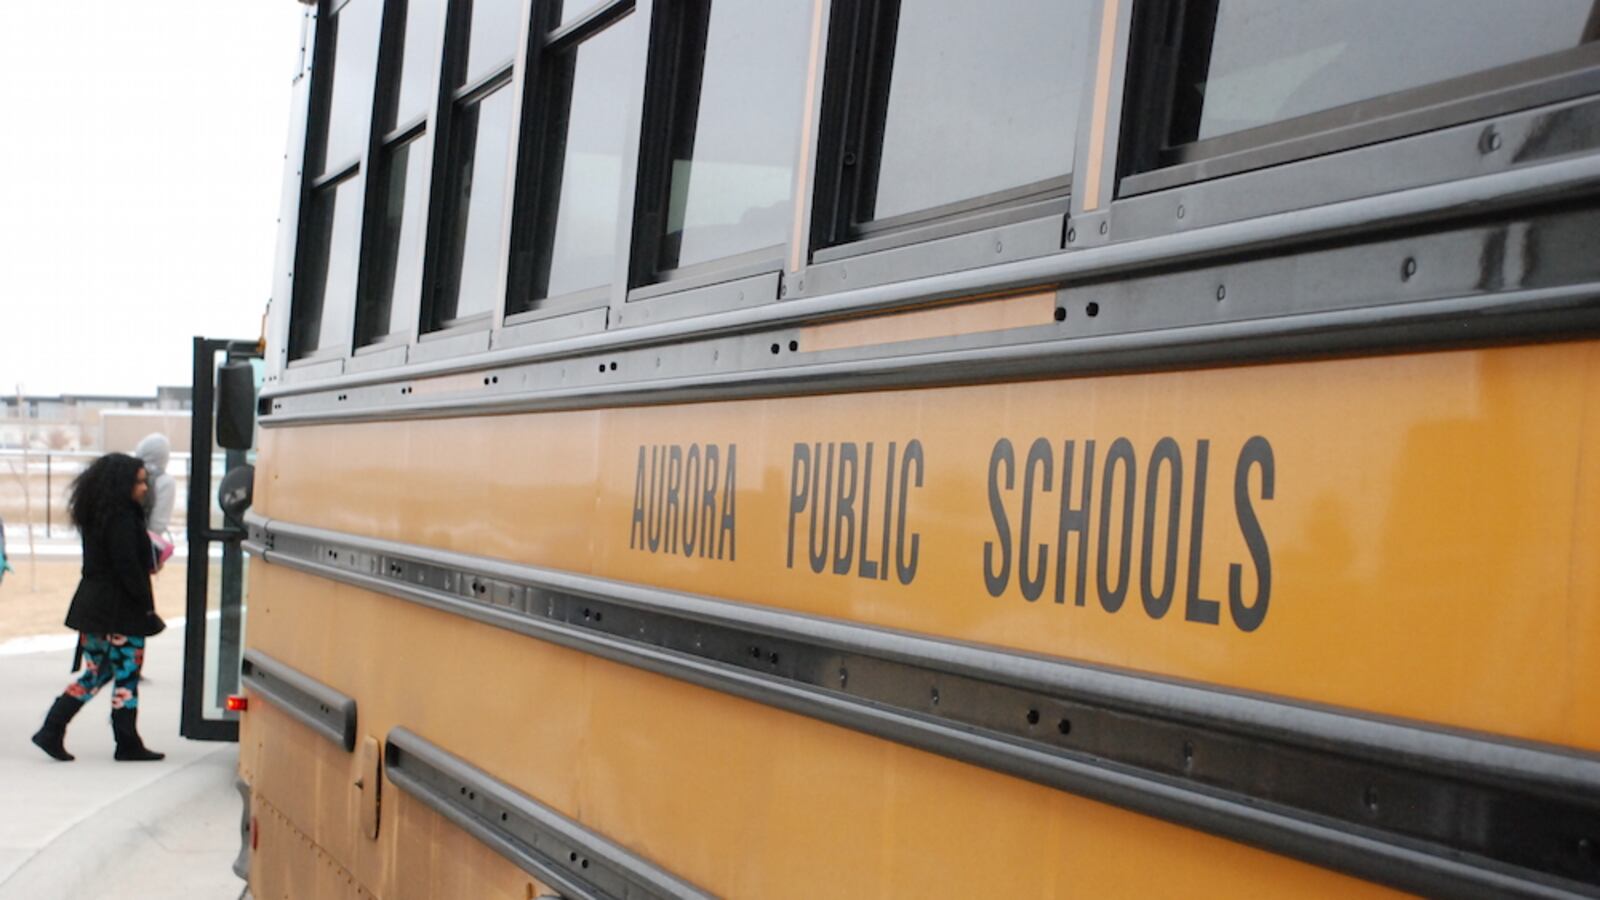 An Aurora Public Schools bus picks up students after school.